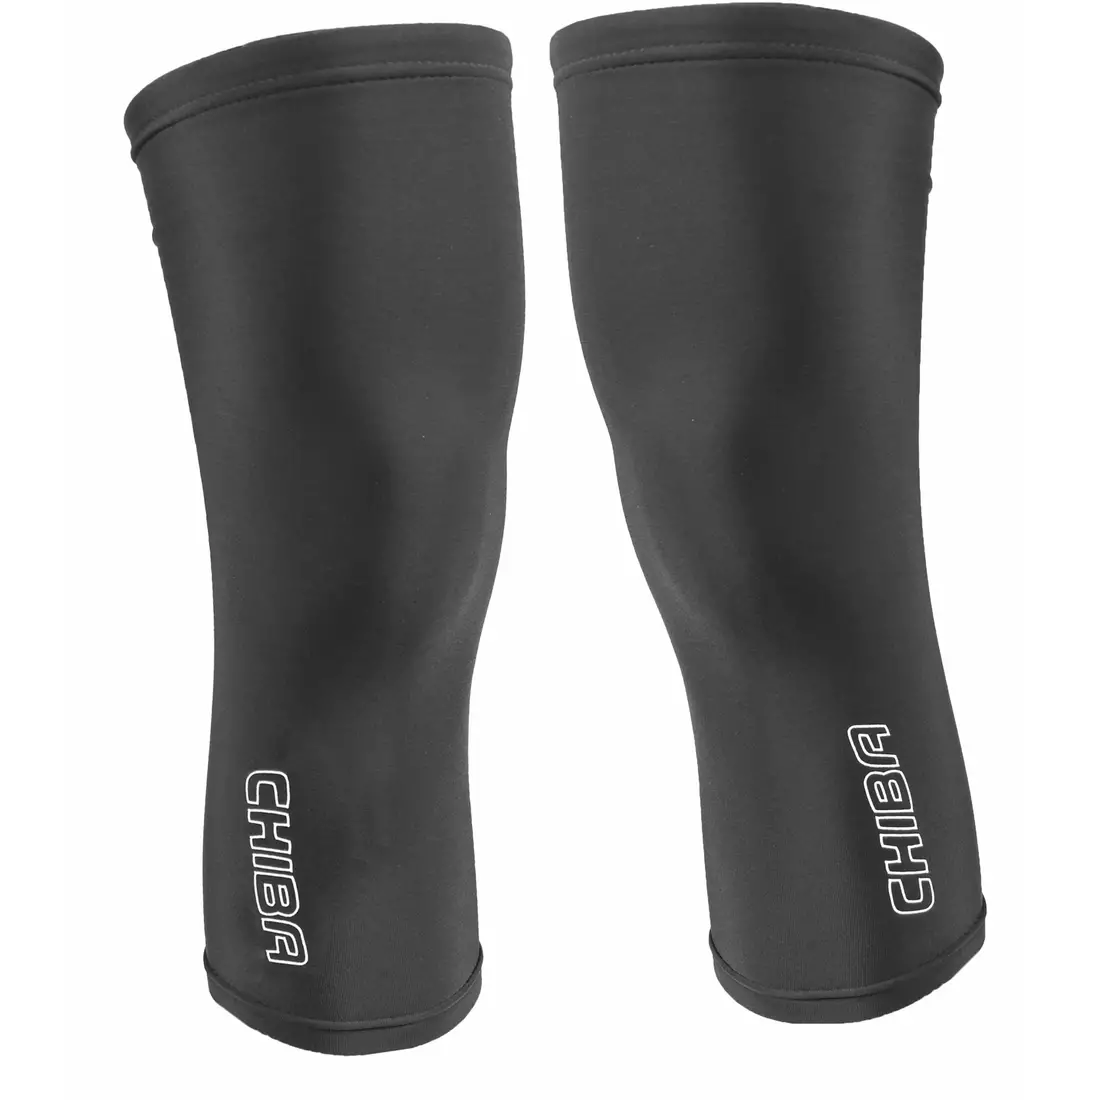 CHIBA - SUPERROUBAIX insulated knee pads